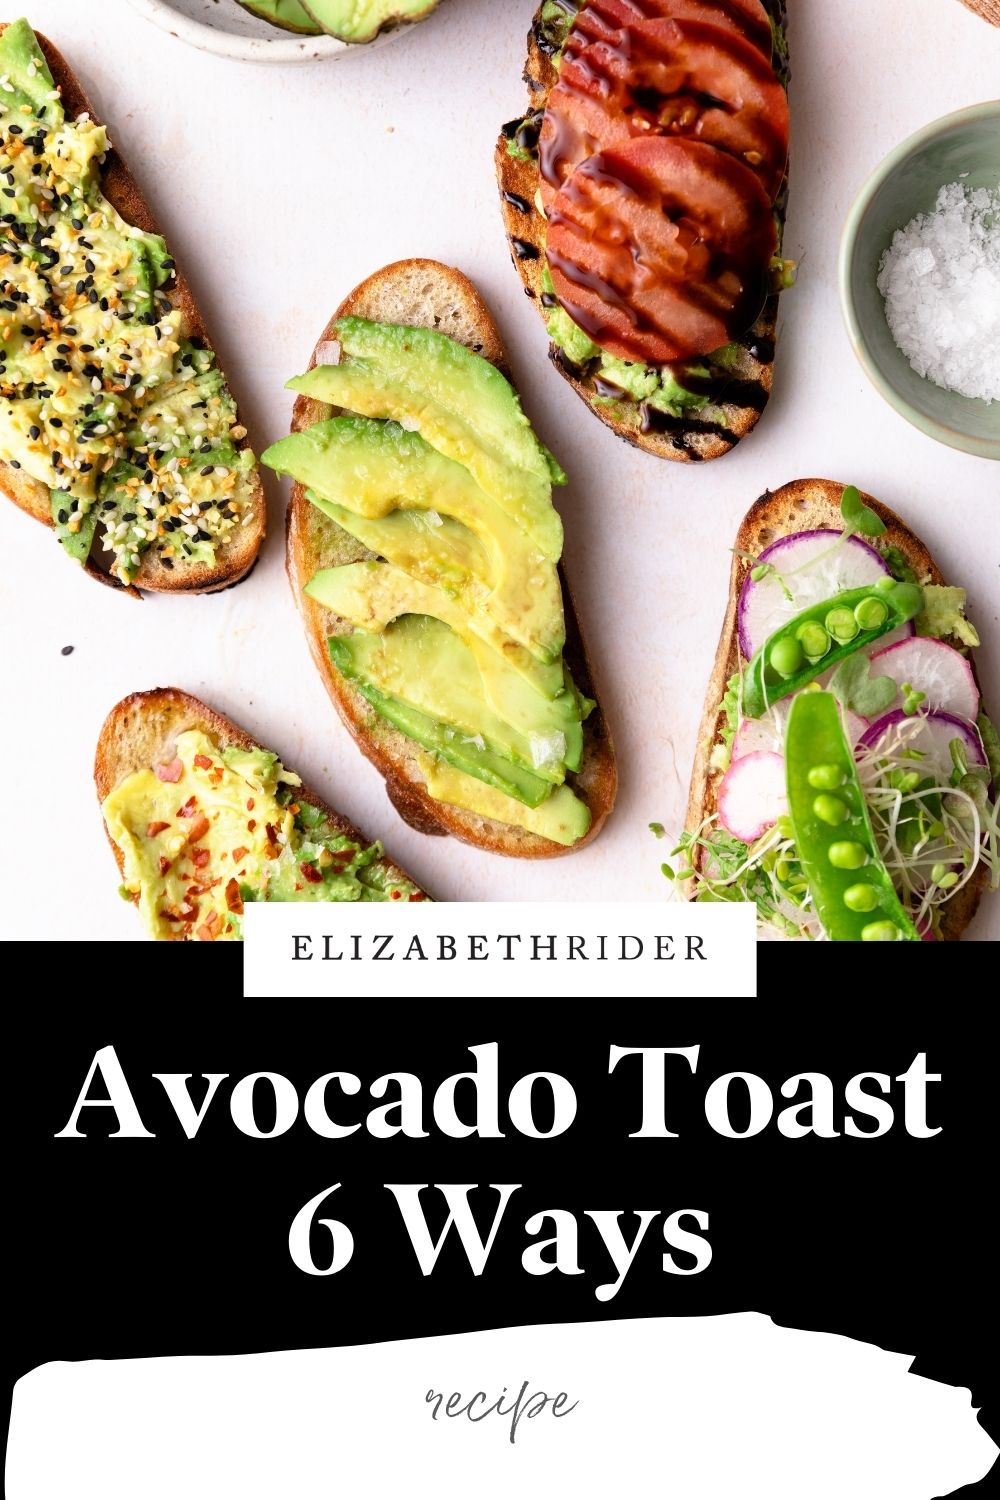 Avocado toast 6 ways Pinterest